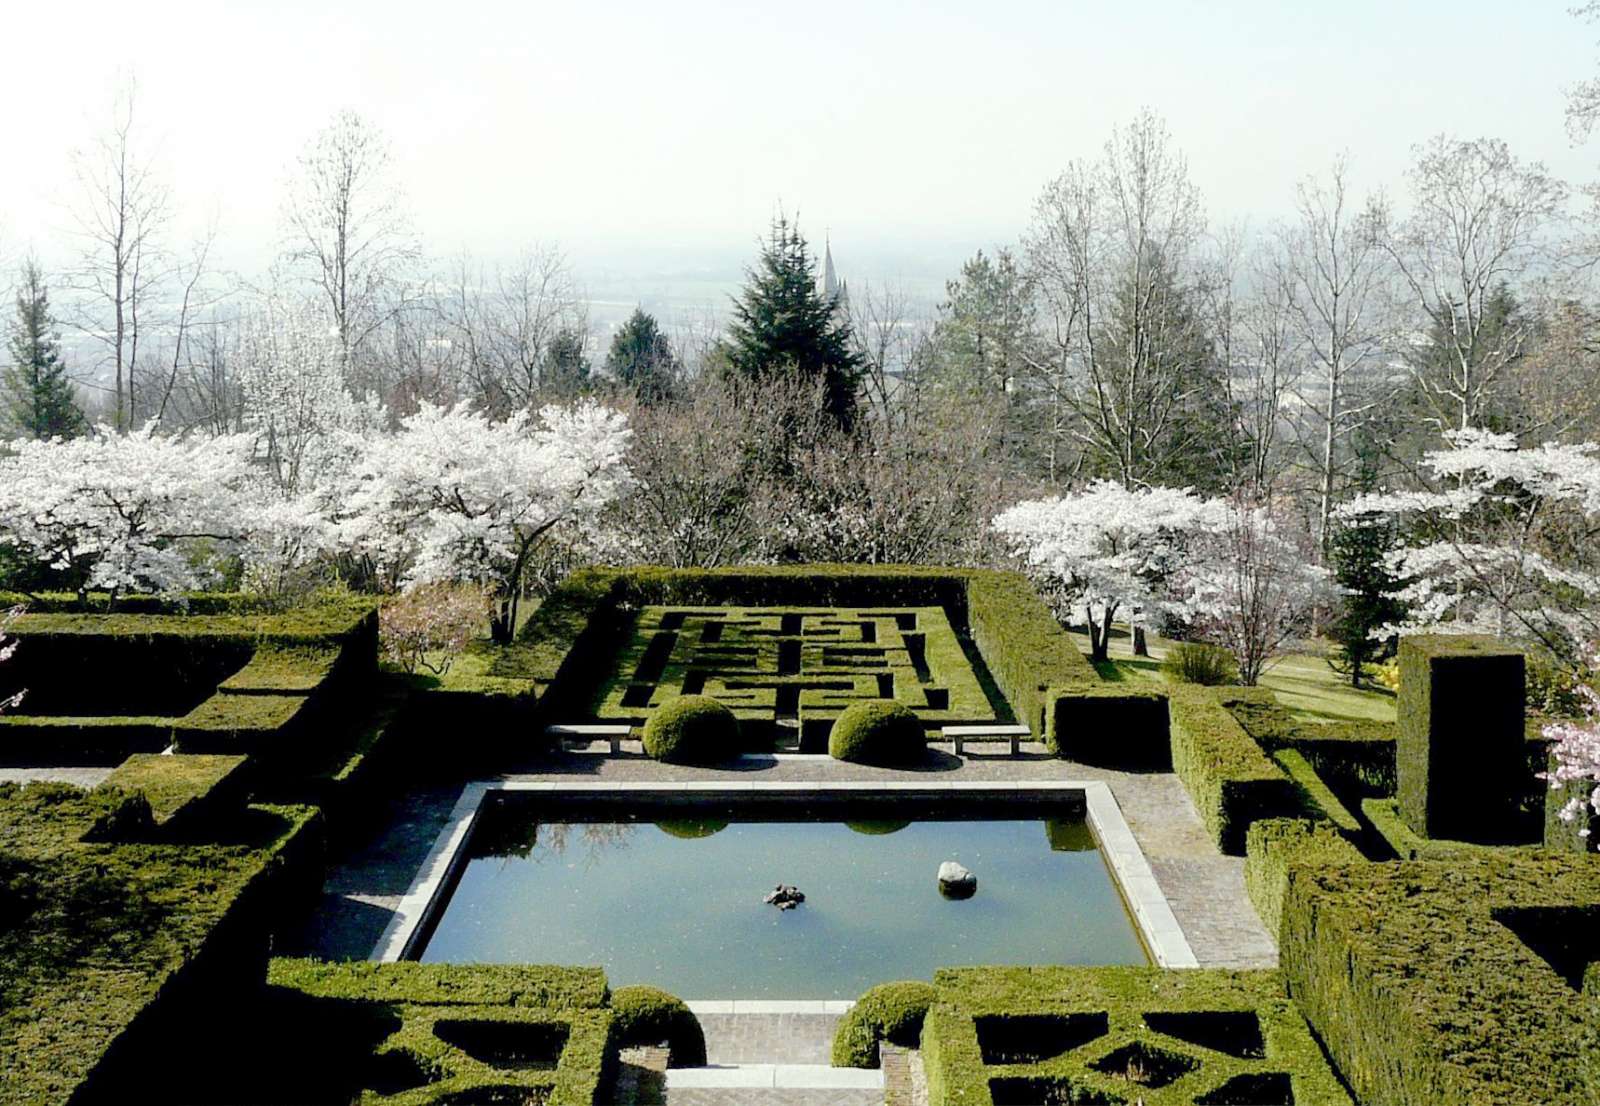 Villa Silvio Pellico. Photo: APGI - Association of Parks and Gardens of Italy